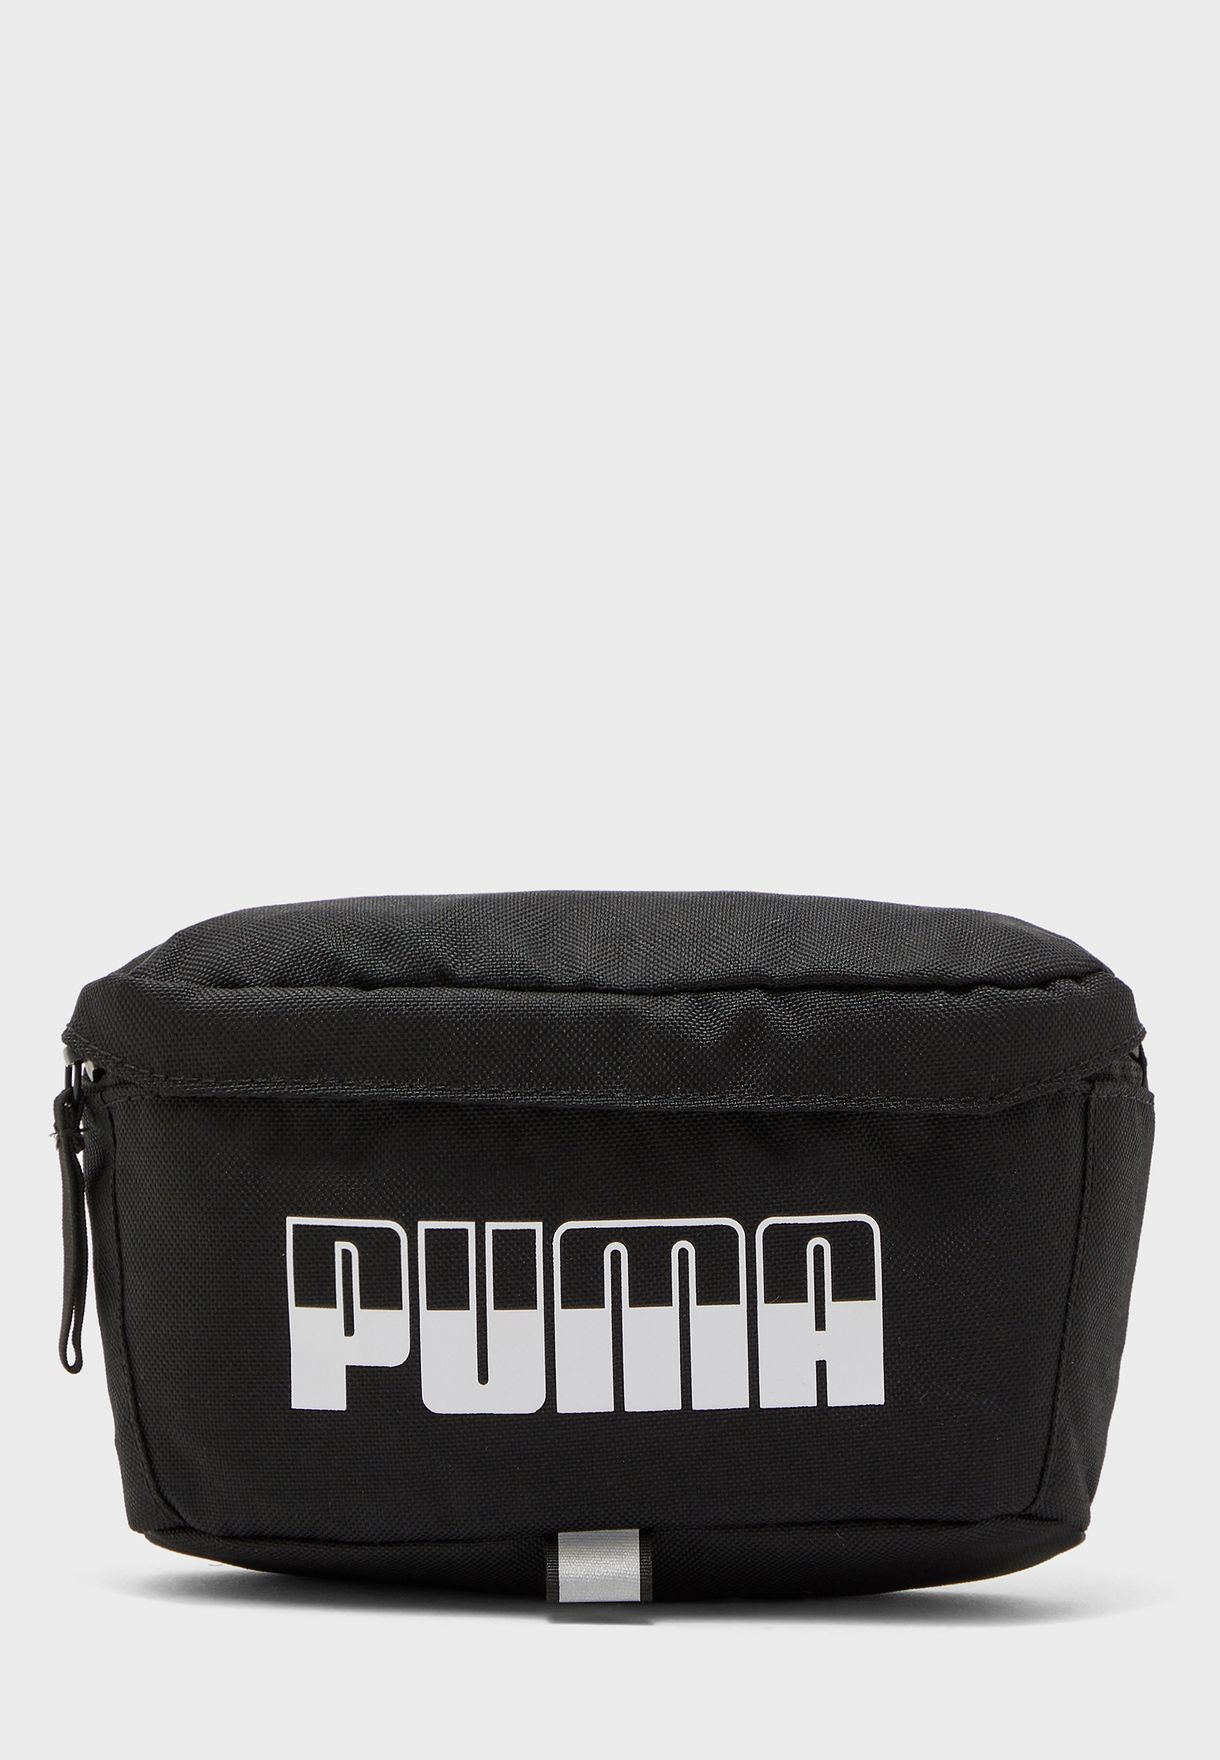 puma black leather bag